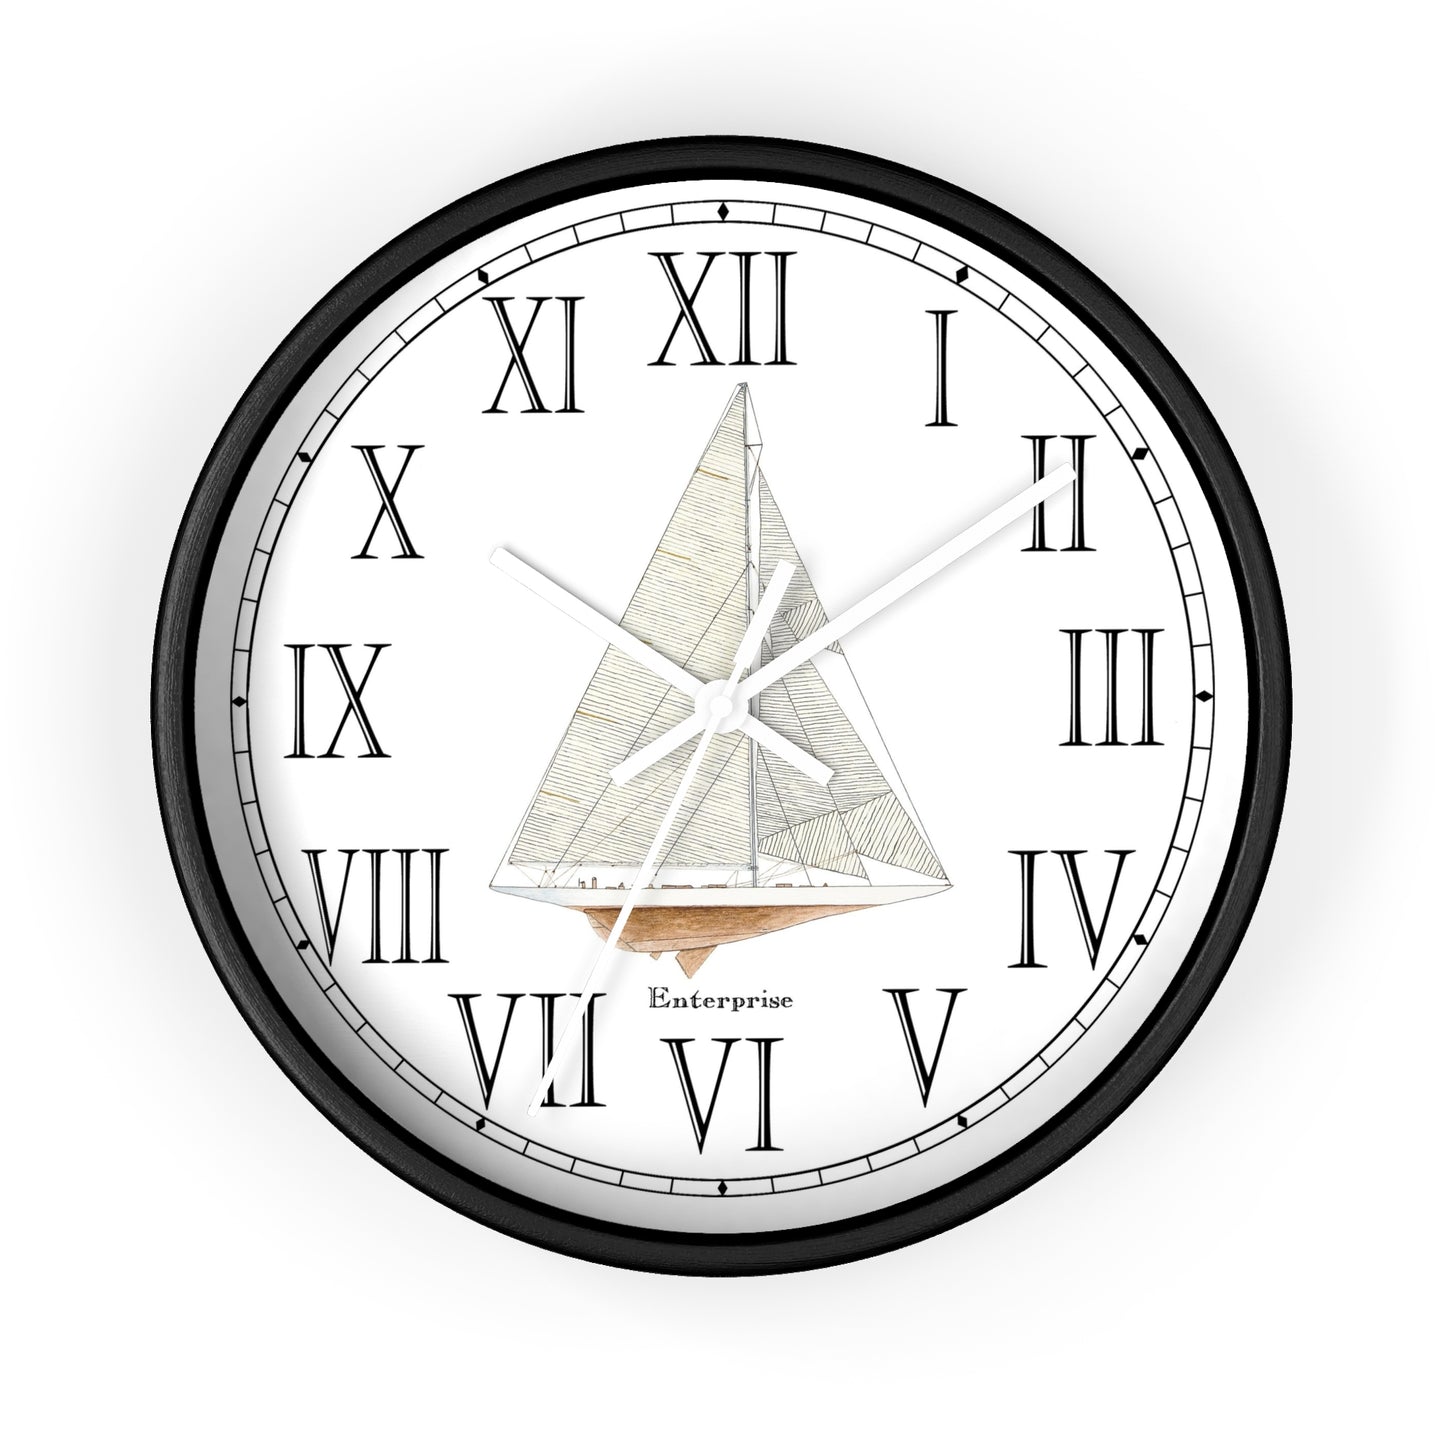 Enterprise Roman Numeral Clock